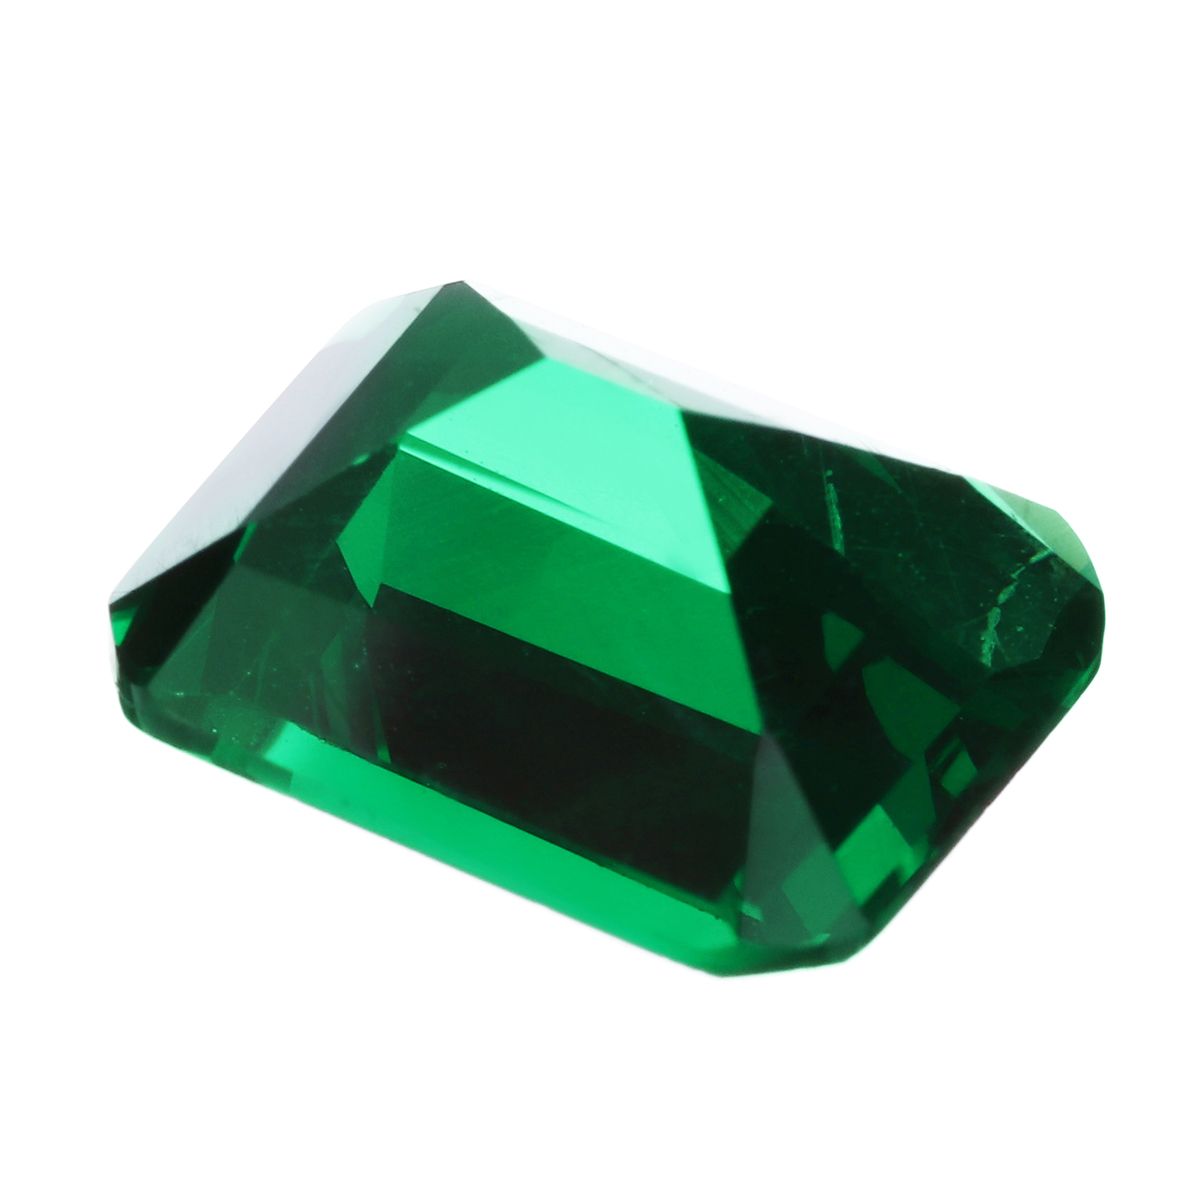 VVS-Clarity-AAA-Synthetic-Green-Emerald-Diamond-Sapphire-Cut-10x12mm-Loose-Gems-Decorations-1571679